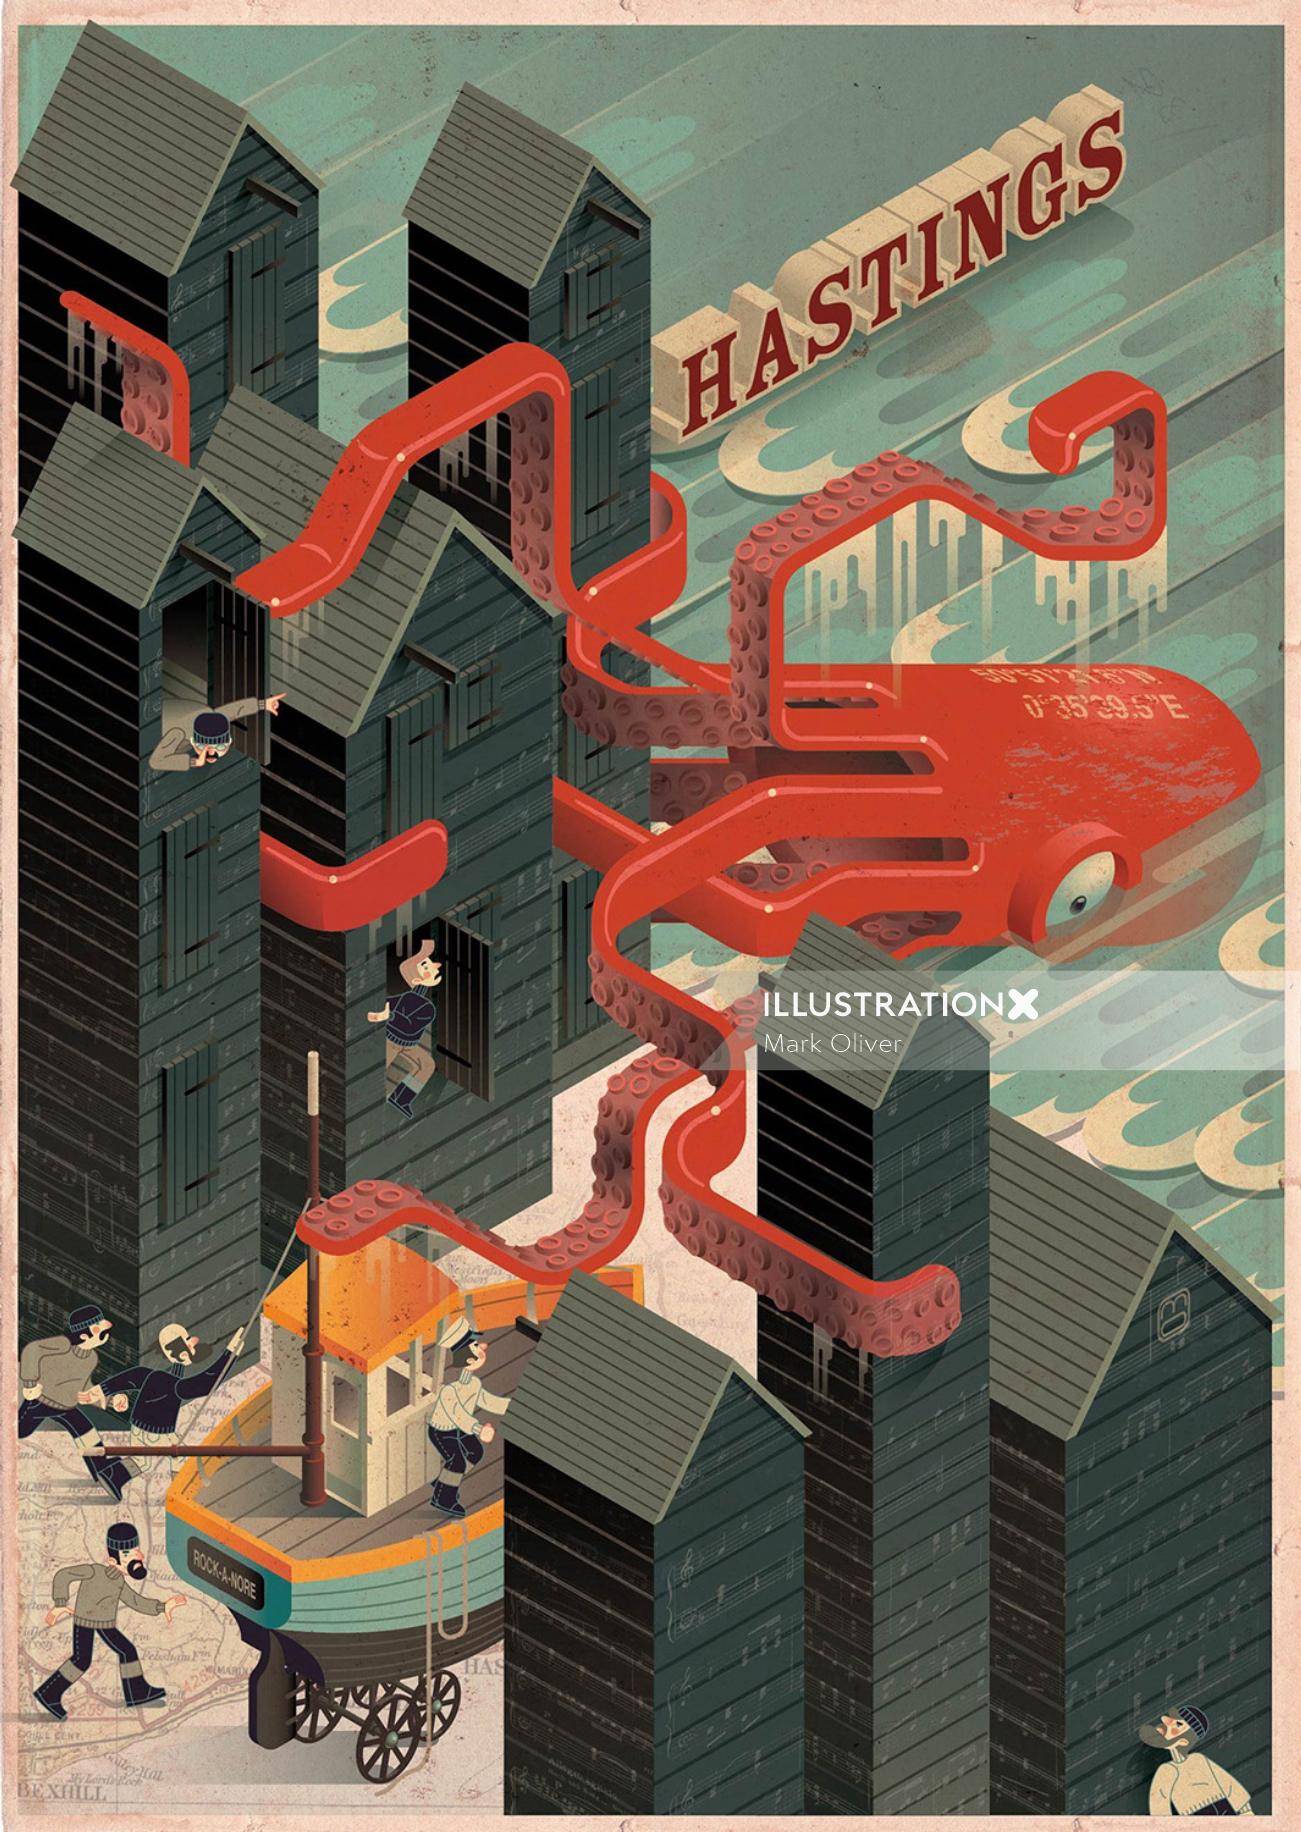 Art éditorial de Hastings par Mark Oliver